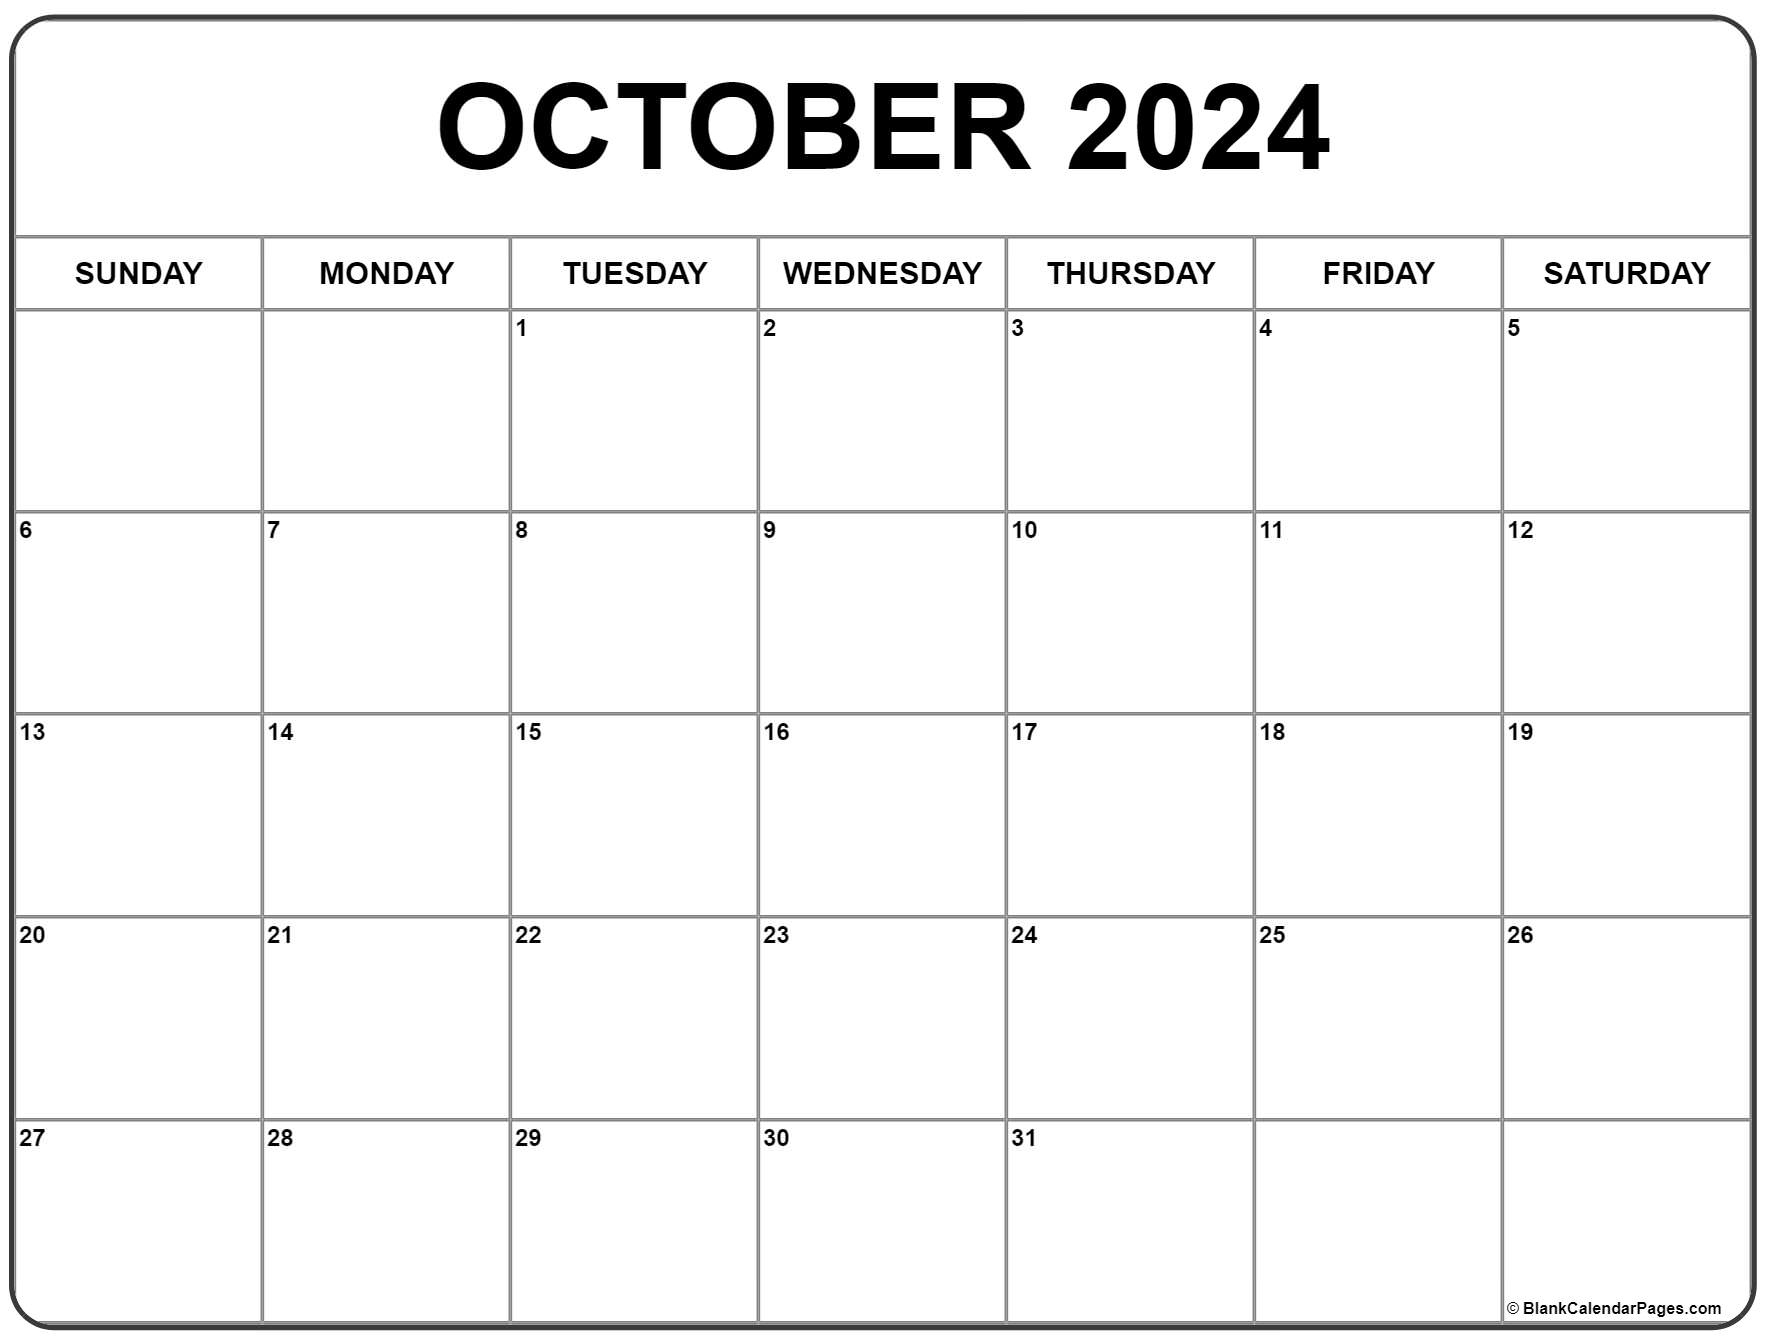 October 2024 Calendar | Free Printable Calendar with Free Printable Appointment Calendar October 2024